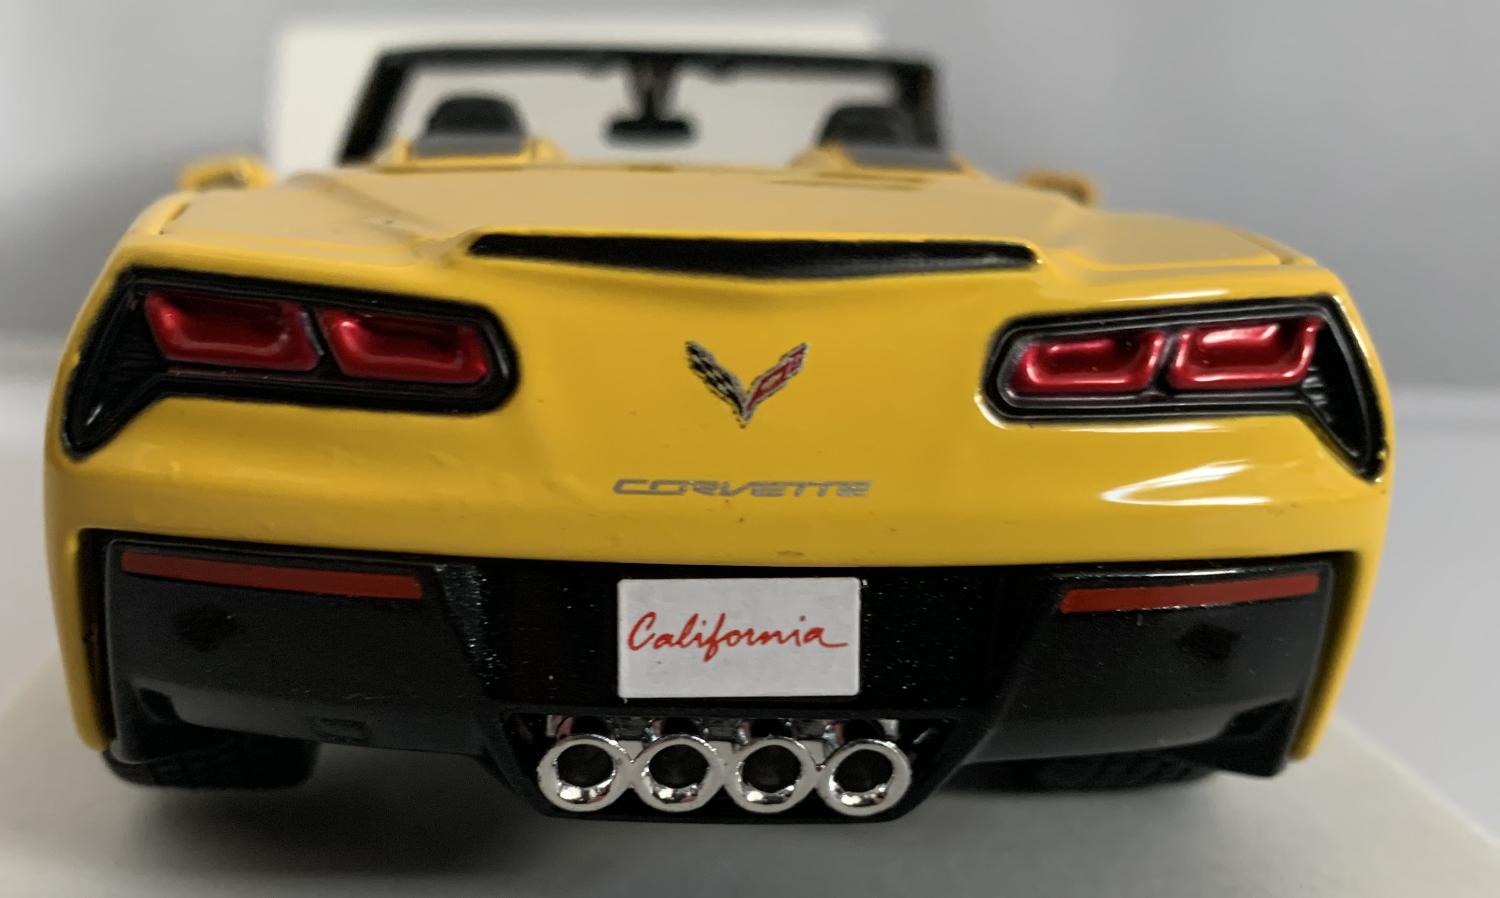 Chevrolet Corvette Stingray Convertible 2014 in yellow 1 :24 scale model from Maisto, 31501